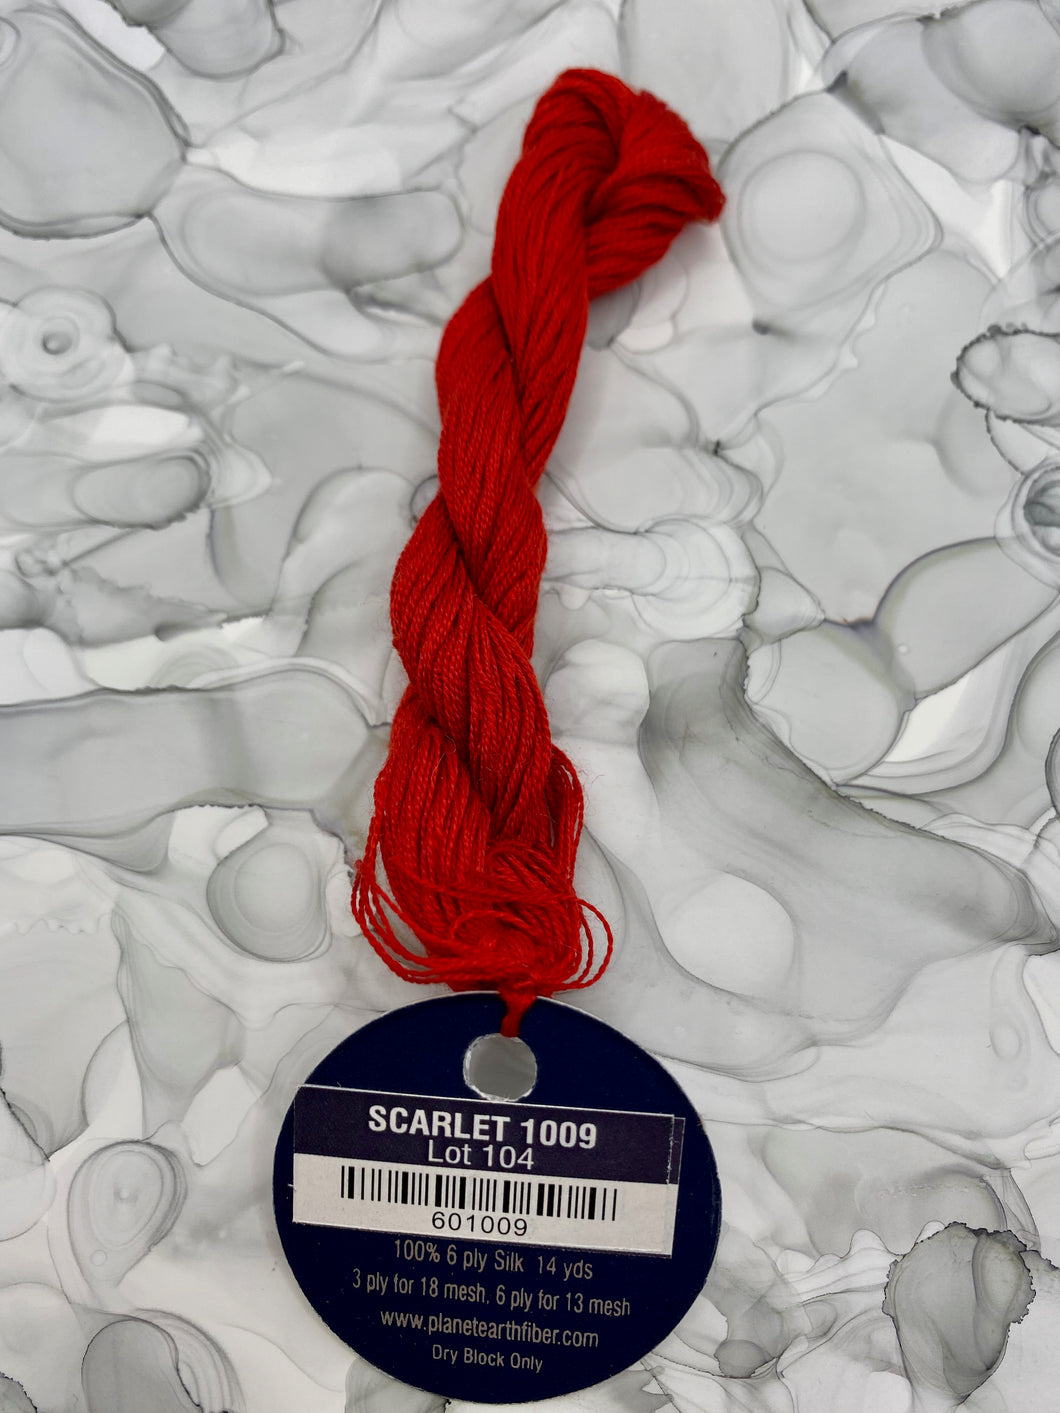 Scarlet (#1009) Planet Earth 6 ply silk